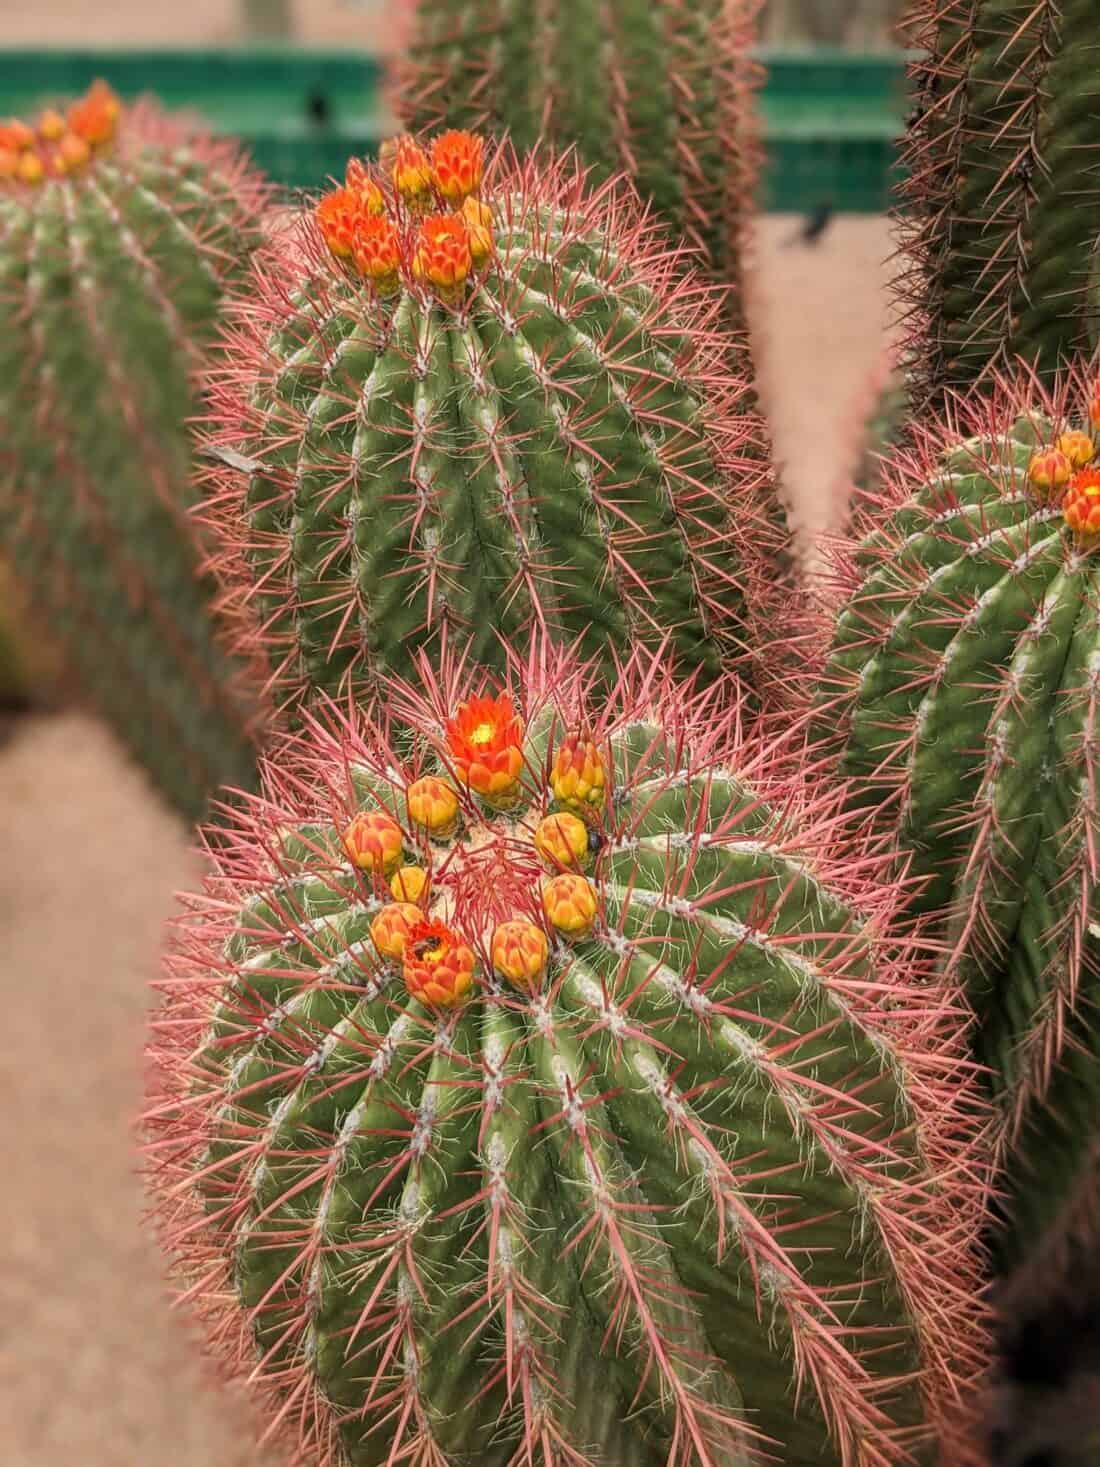 Barrel cacti with blooming orange flowers.